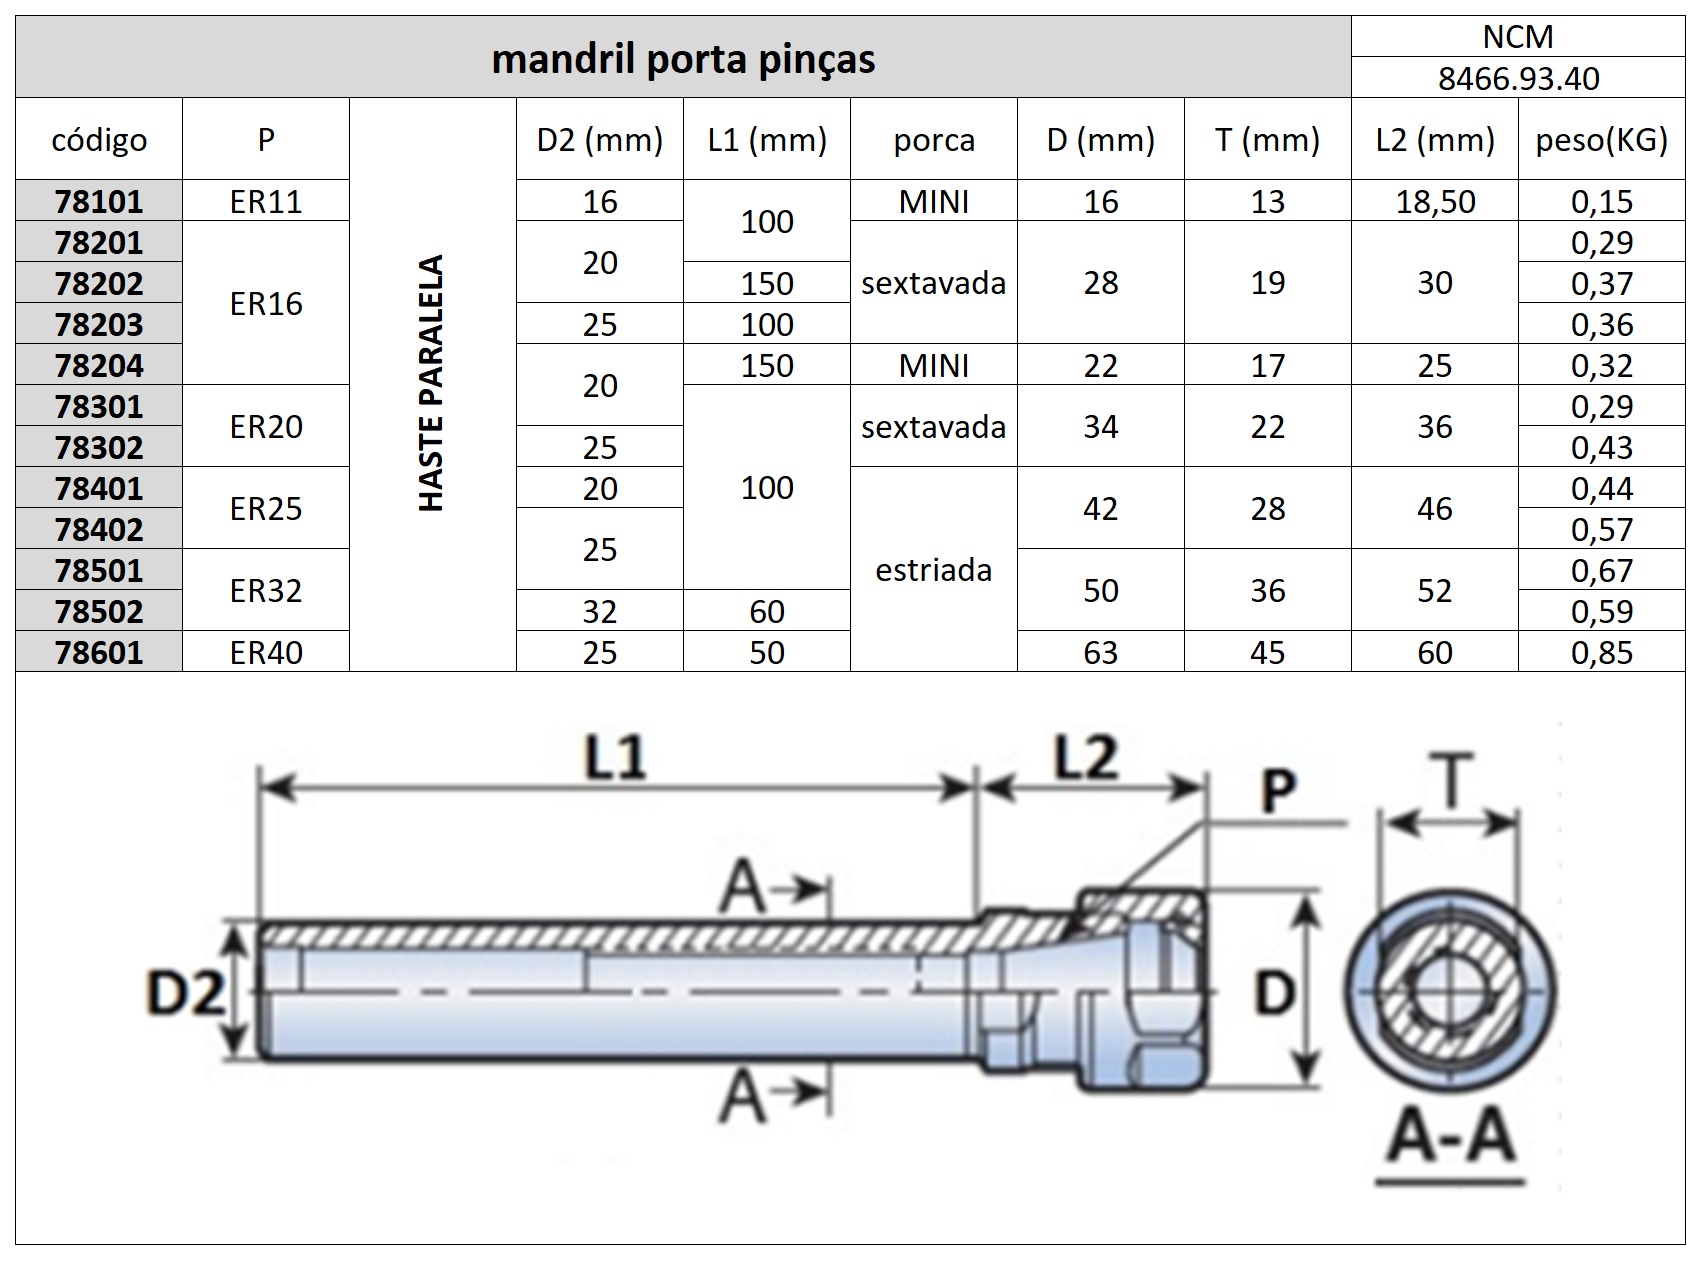 mandril porta pinças er32 haste paralela 32x60 mm